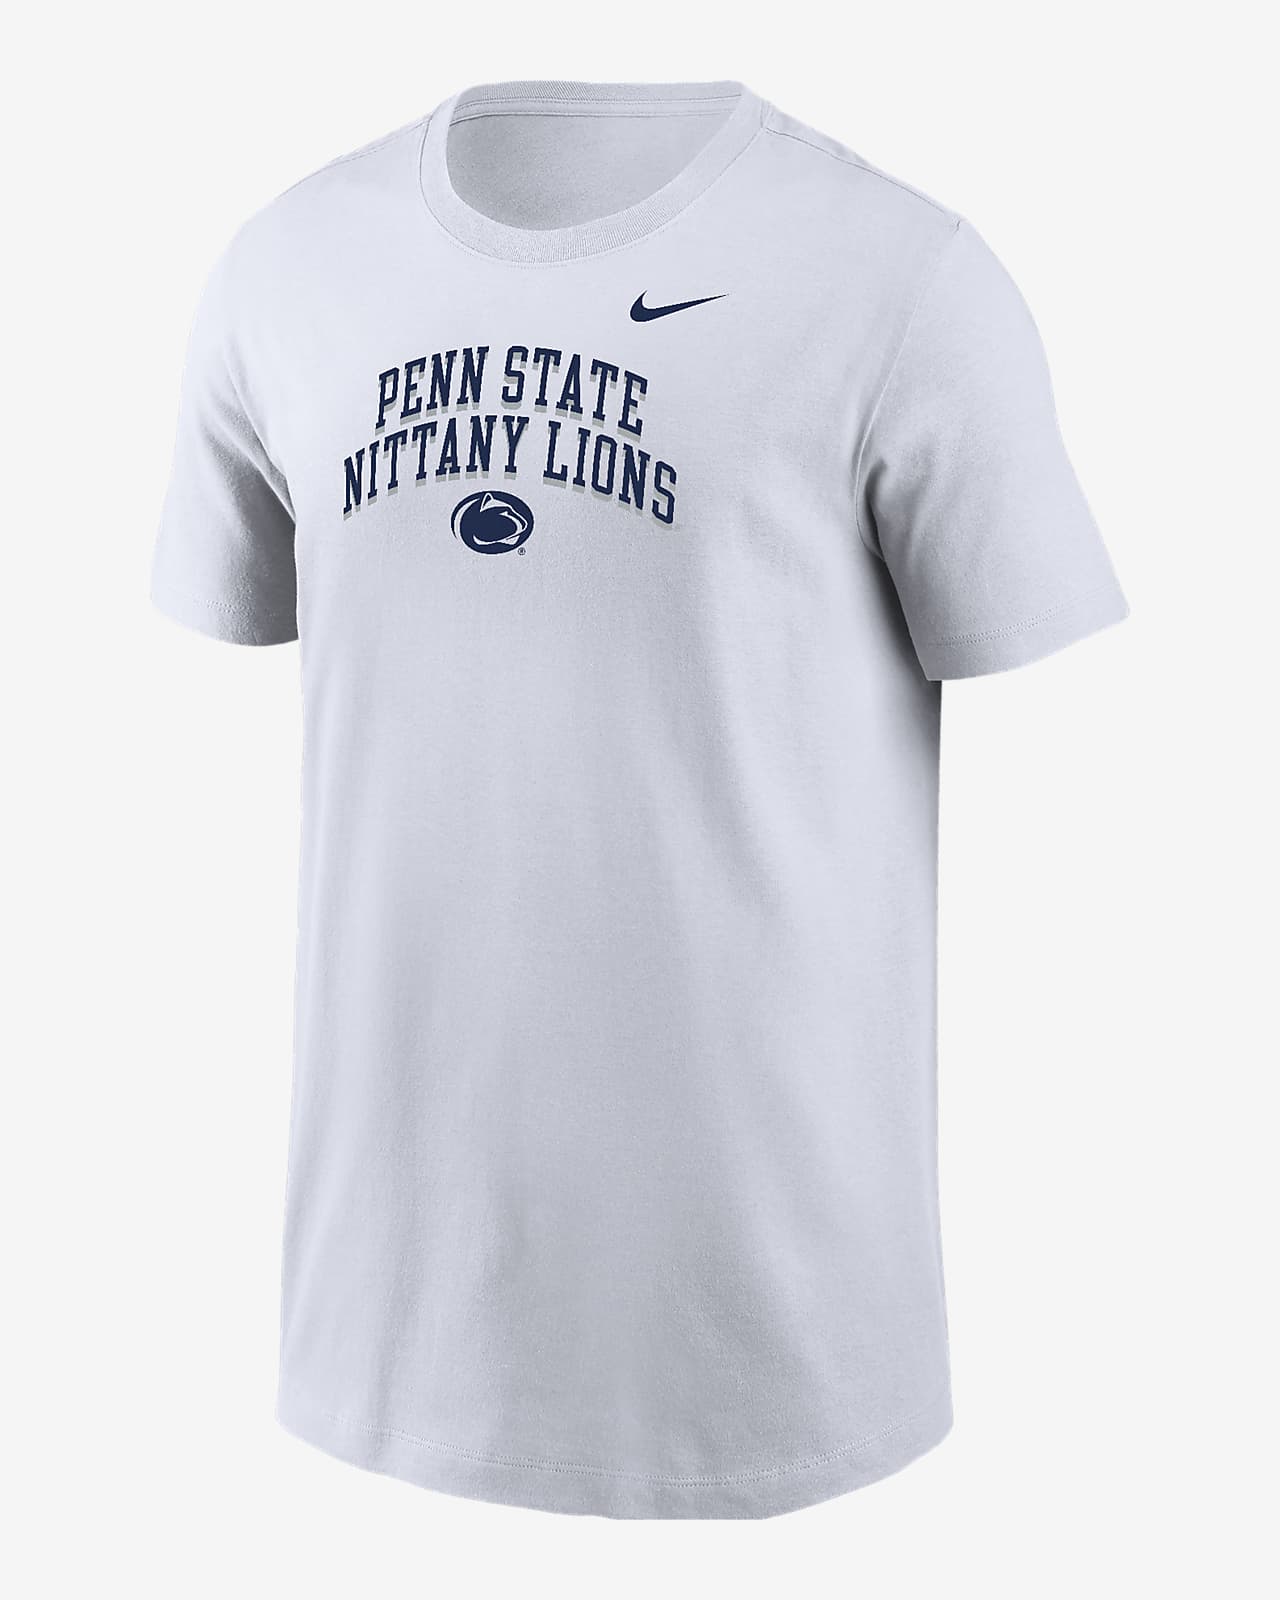 Penn State Big Kids' (Boys') Nike College T-Shirt